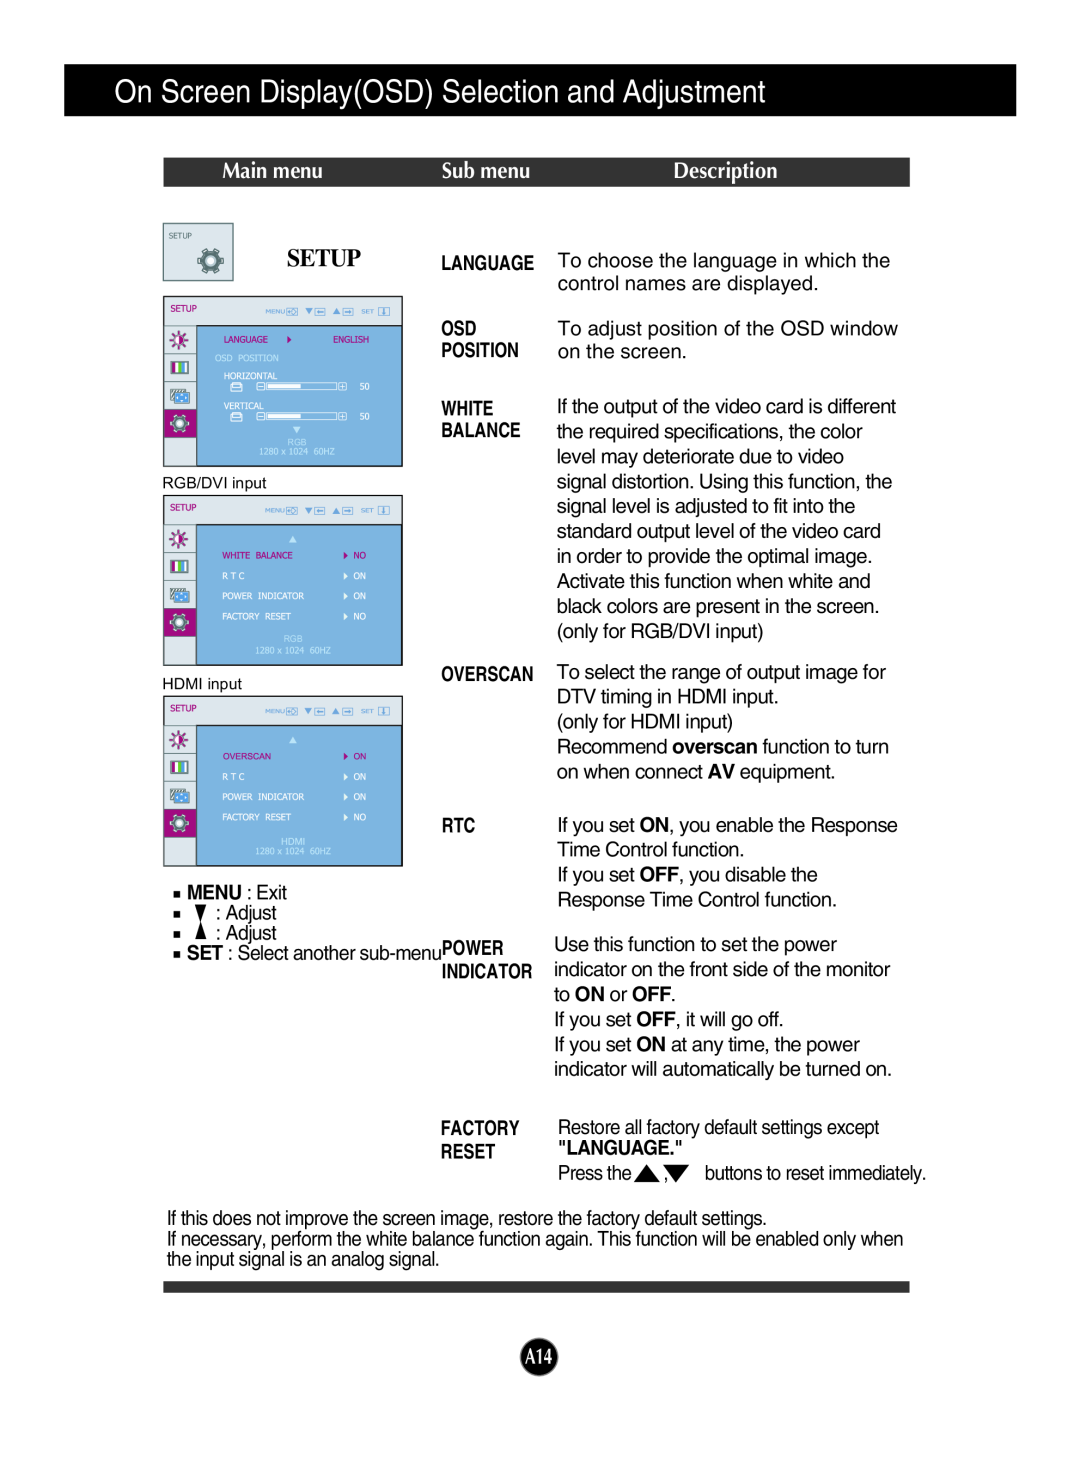 LG Electronics W2261V Setup, On Screen DisplayOSD Selection and Adjustment, Main menu, Sub menu, Description, Position 